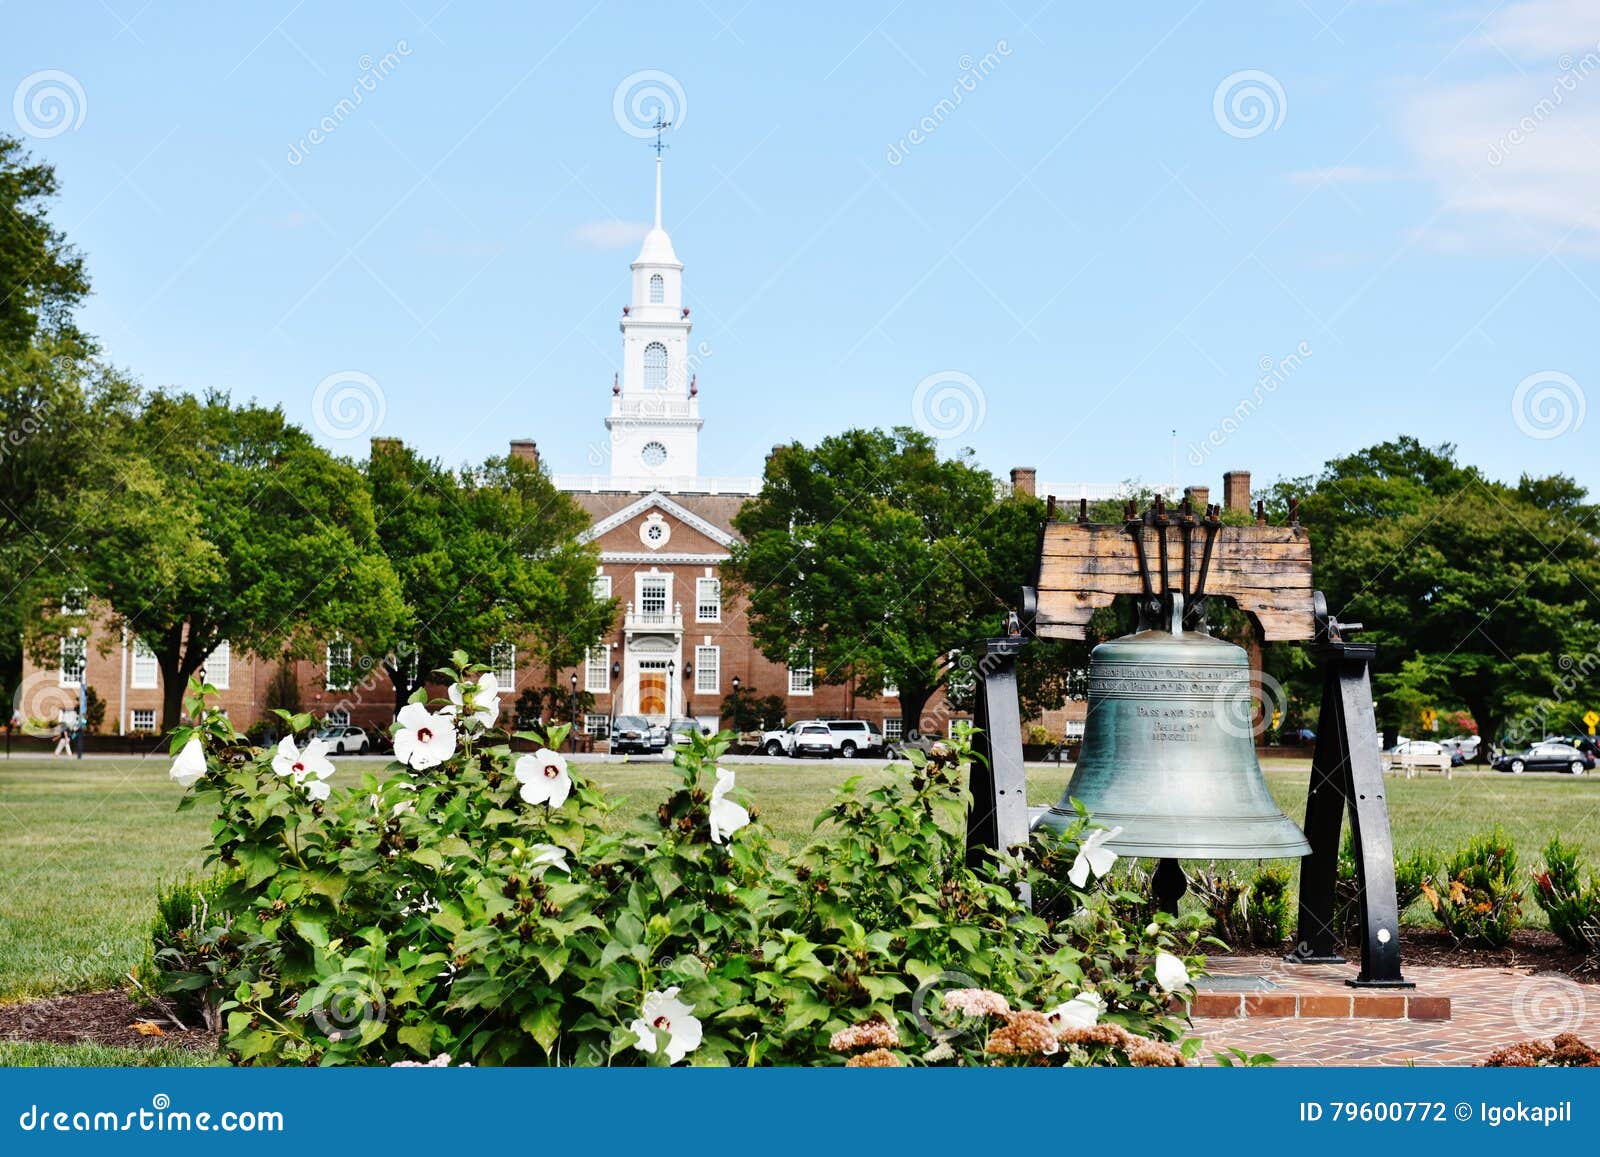 Delaware Legislative Hall Liberty Bell Dover Stock Photo - Image of ancient, 79600772